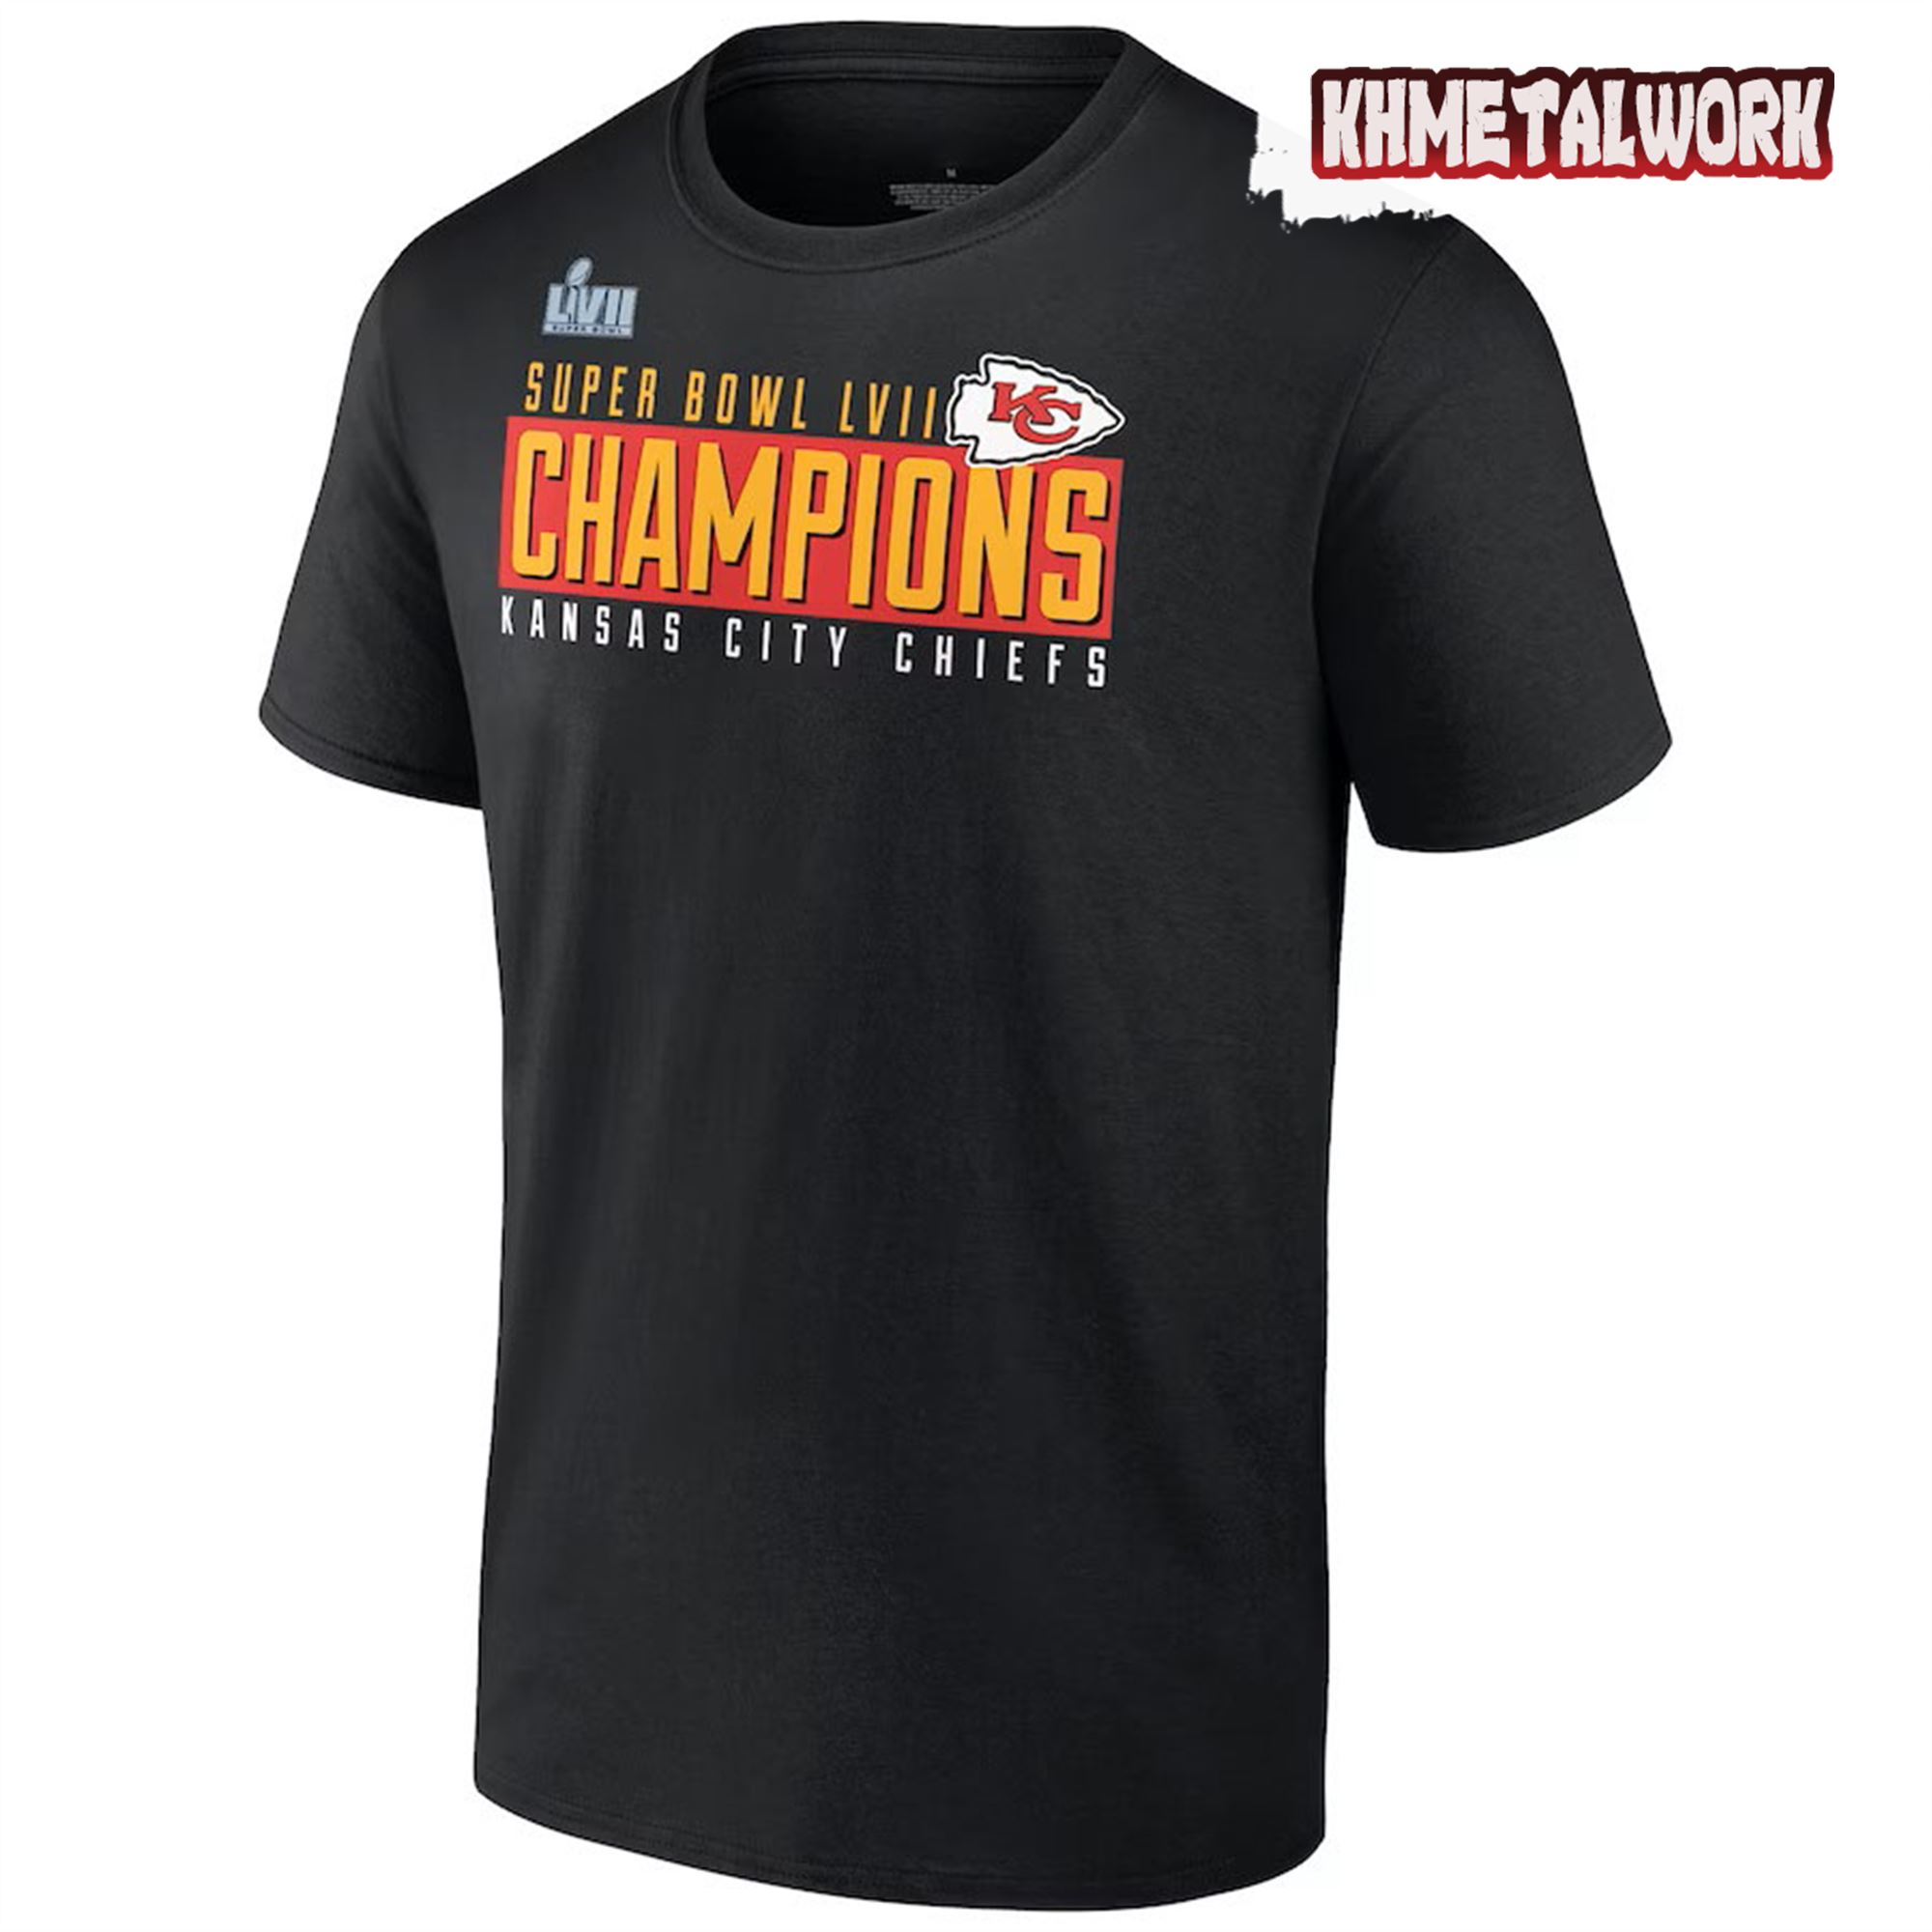 Official Kansas City Chiefs Super Bowl Lvii Champions Scoreboard Showcase T-shirt